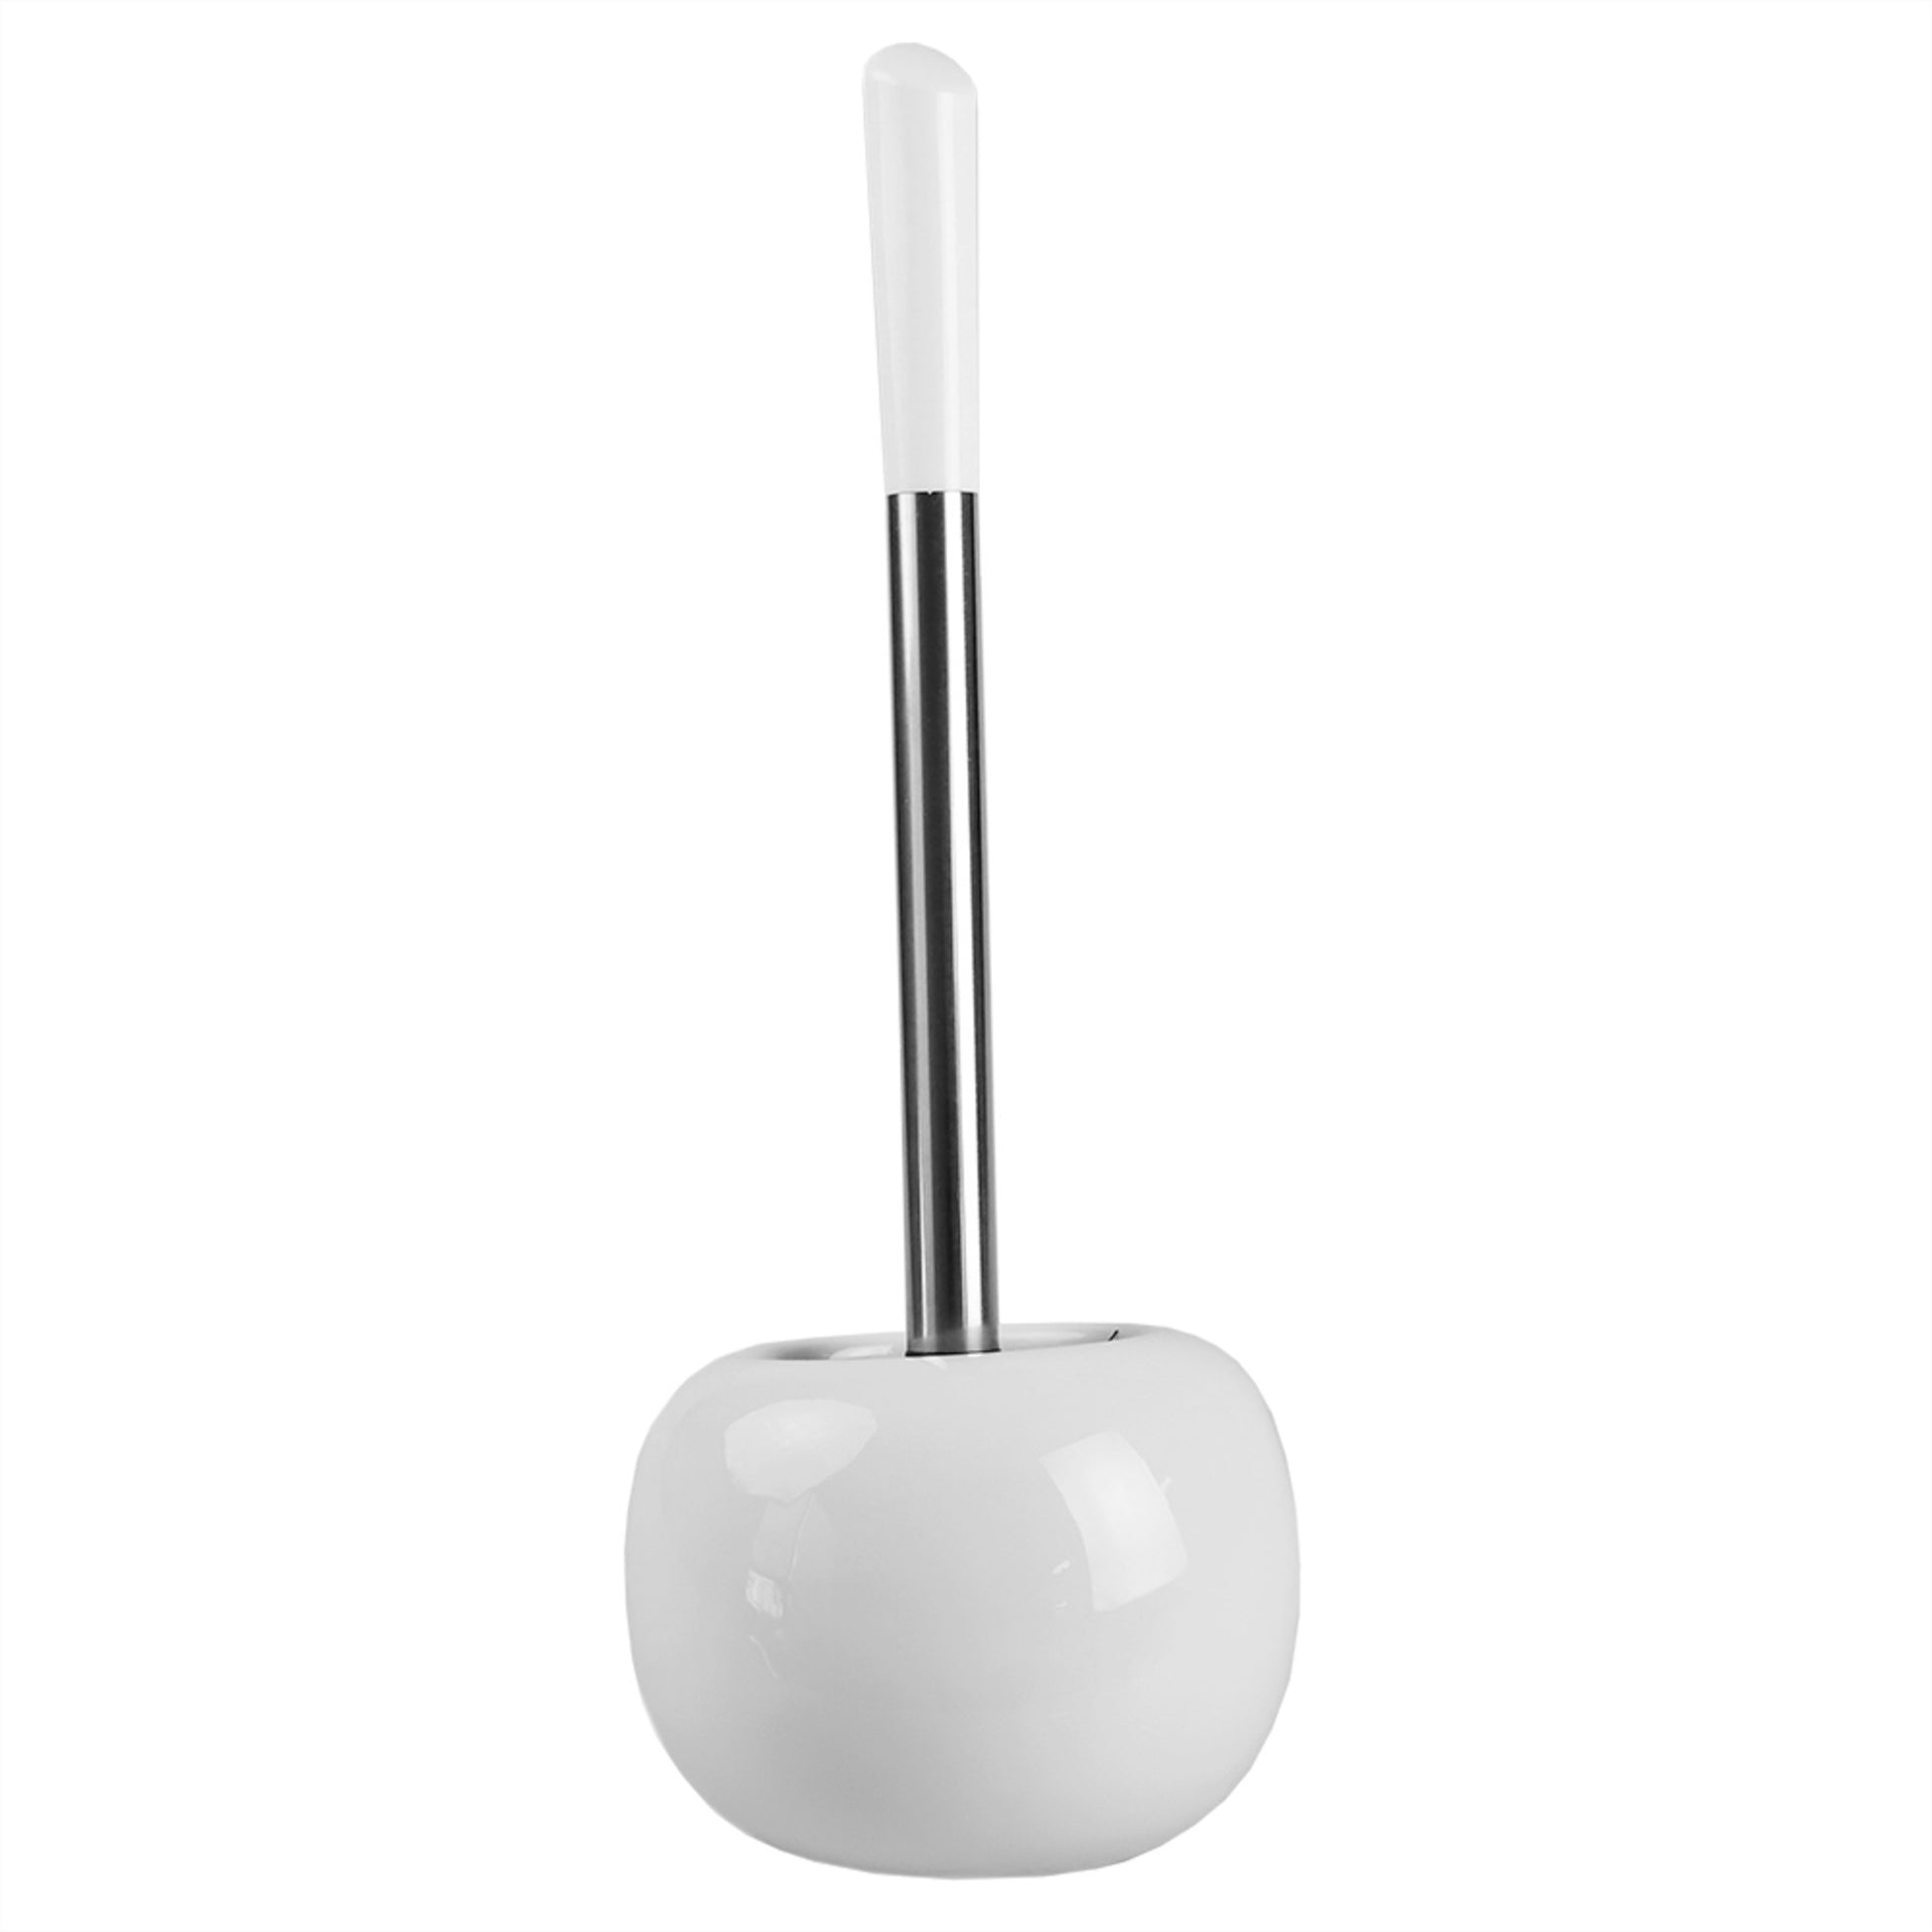 Home Basics Compact Open Top Round Ceramic Toilet Brush Holder, White - White